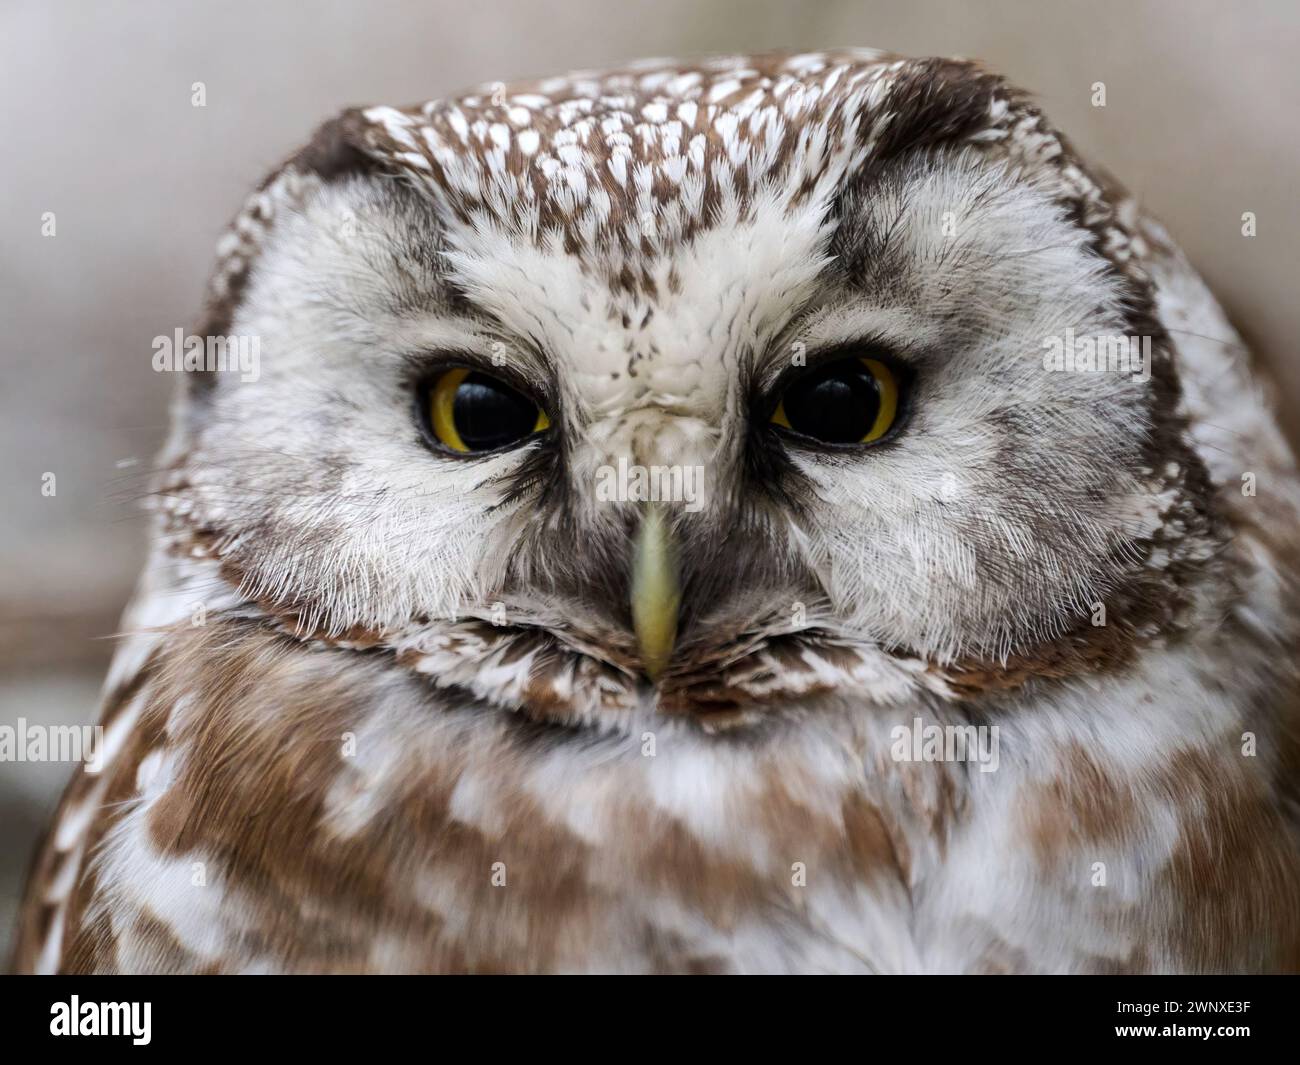 Boreal owl (Aegolius funereus) in its natural environment Stock Photo